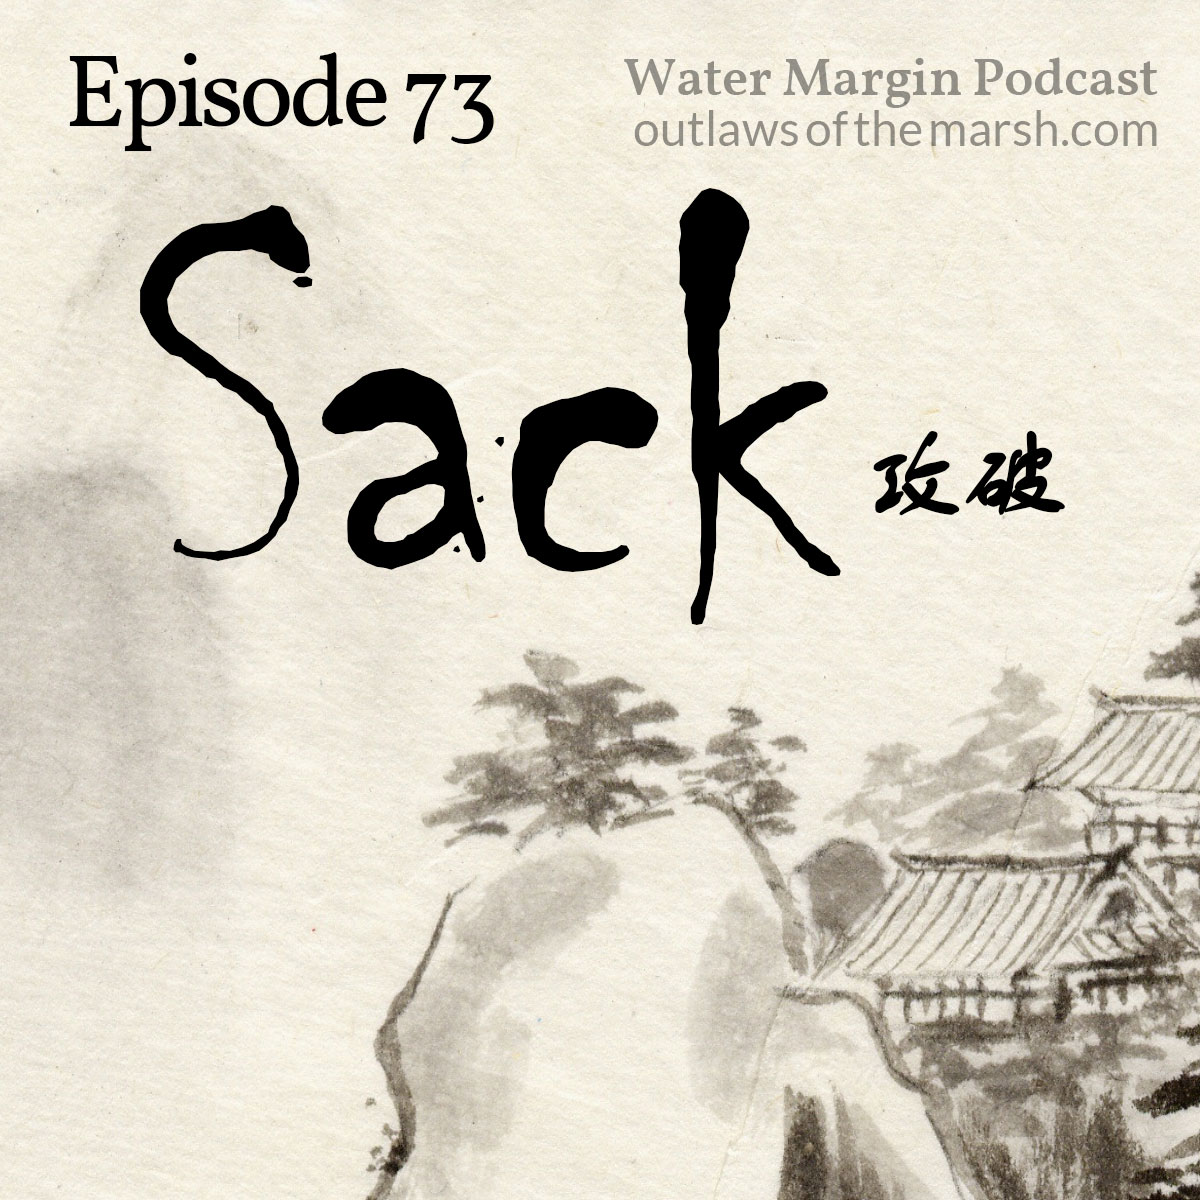 Water Margin Podcast: Episode 073